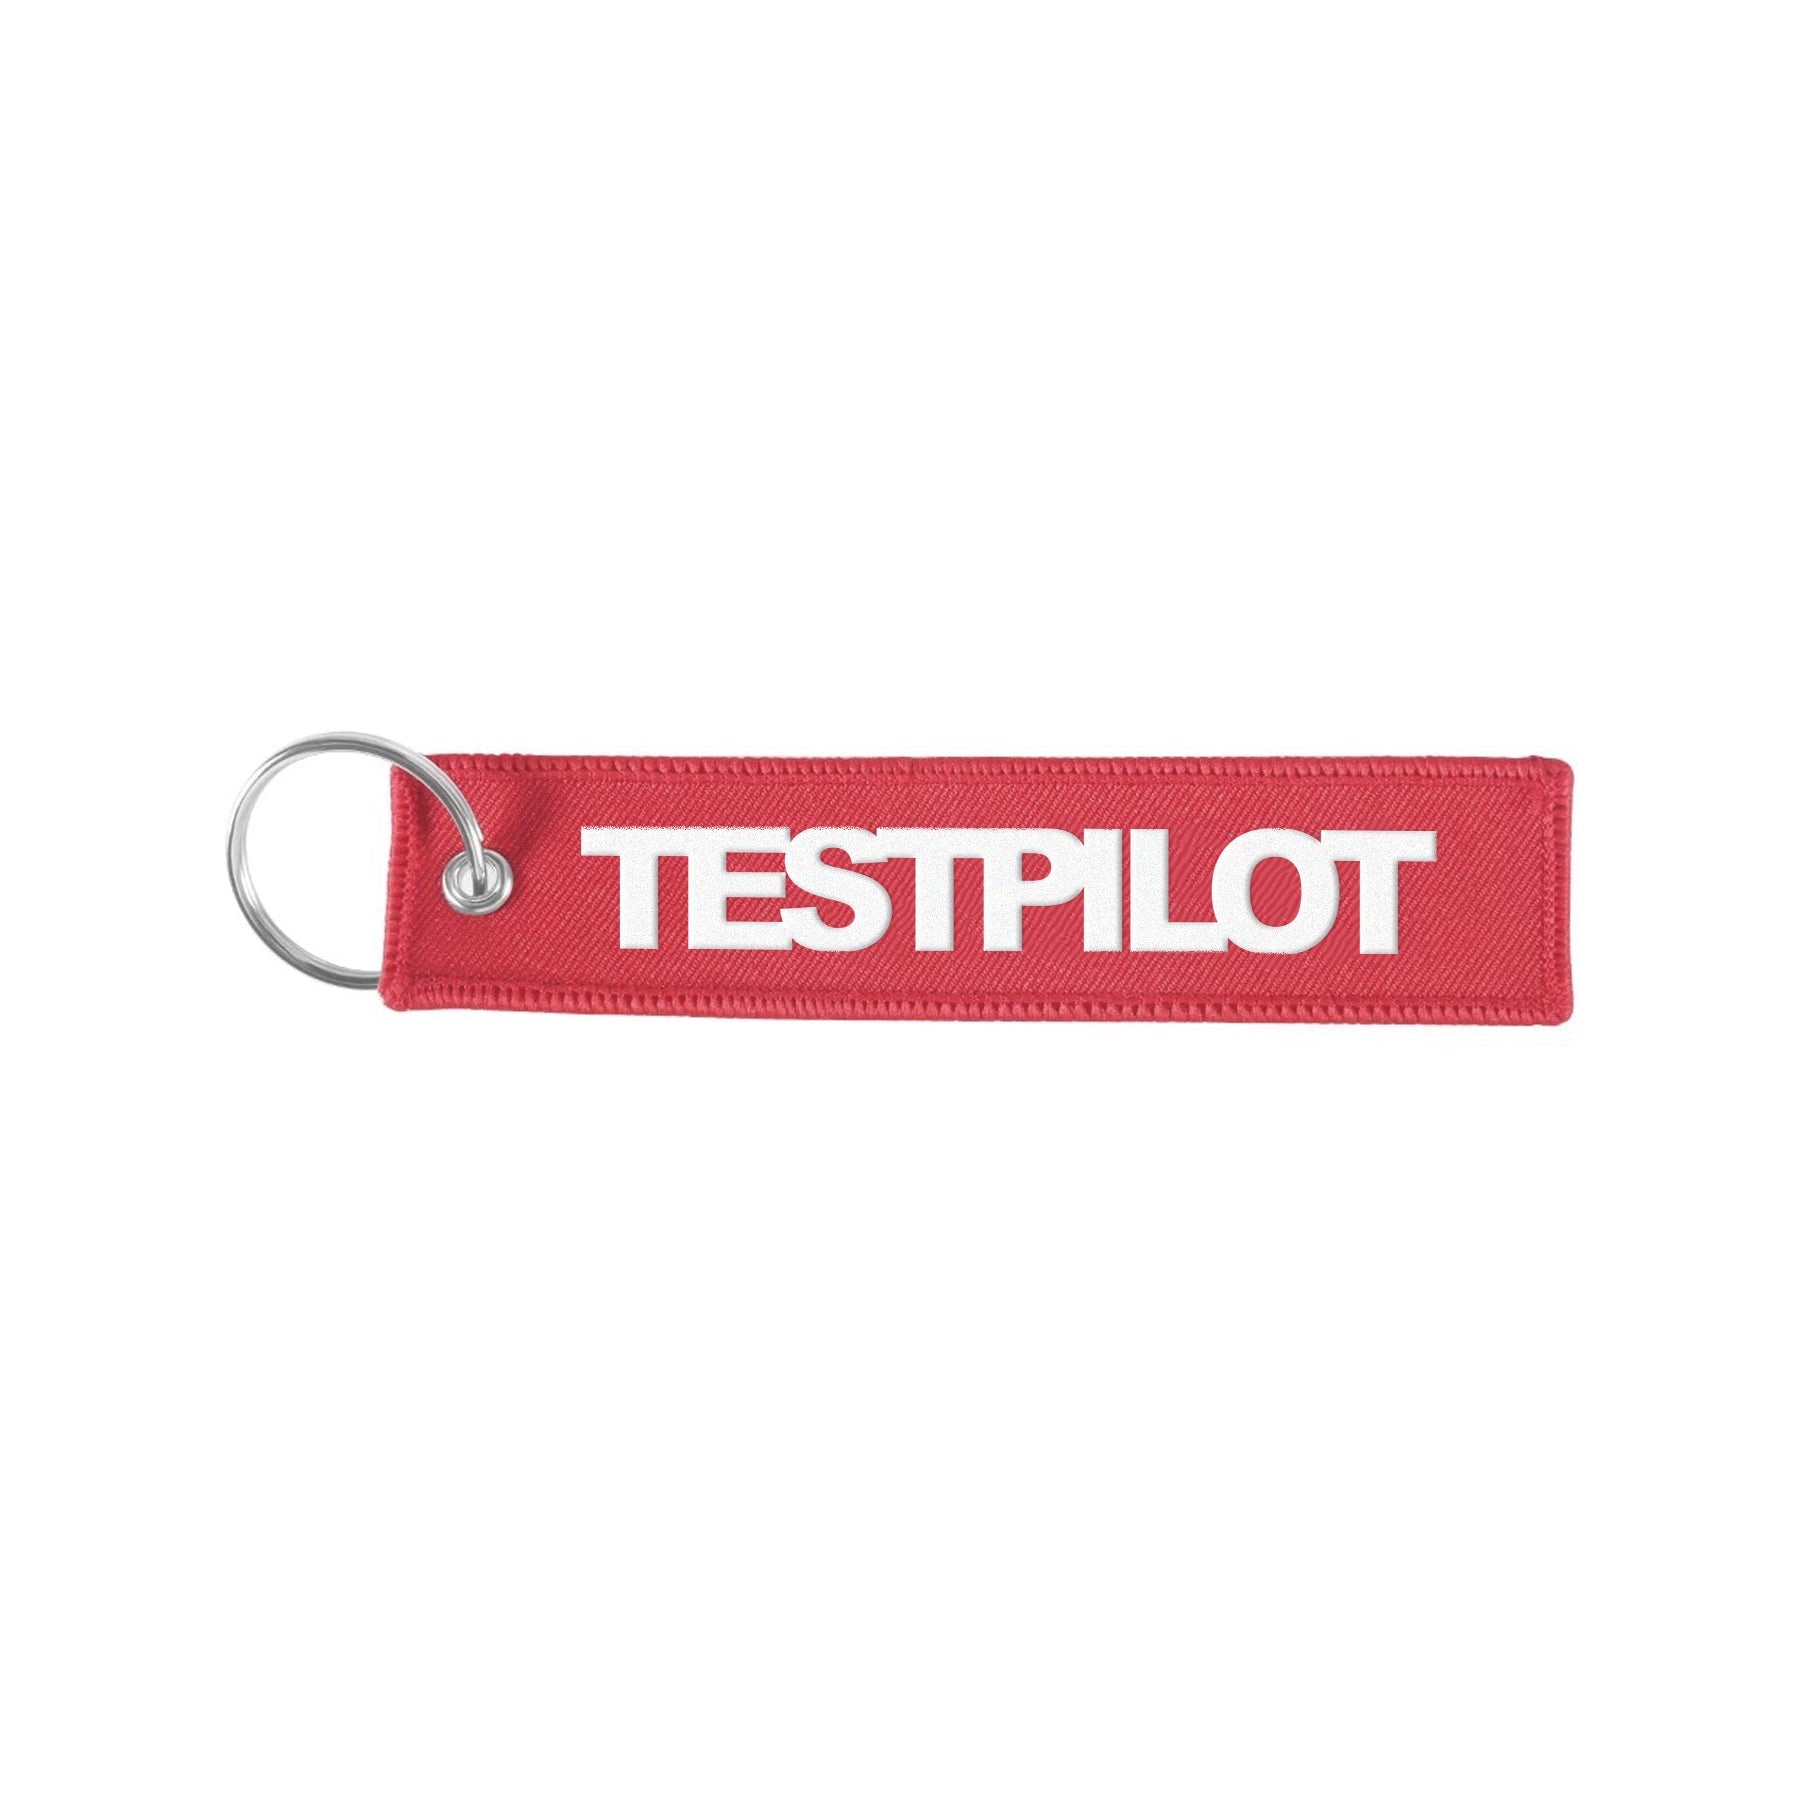 Testpilot - flight tag